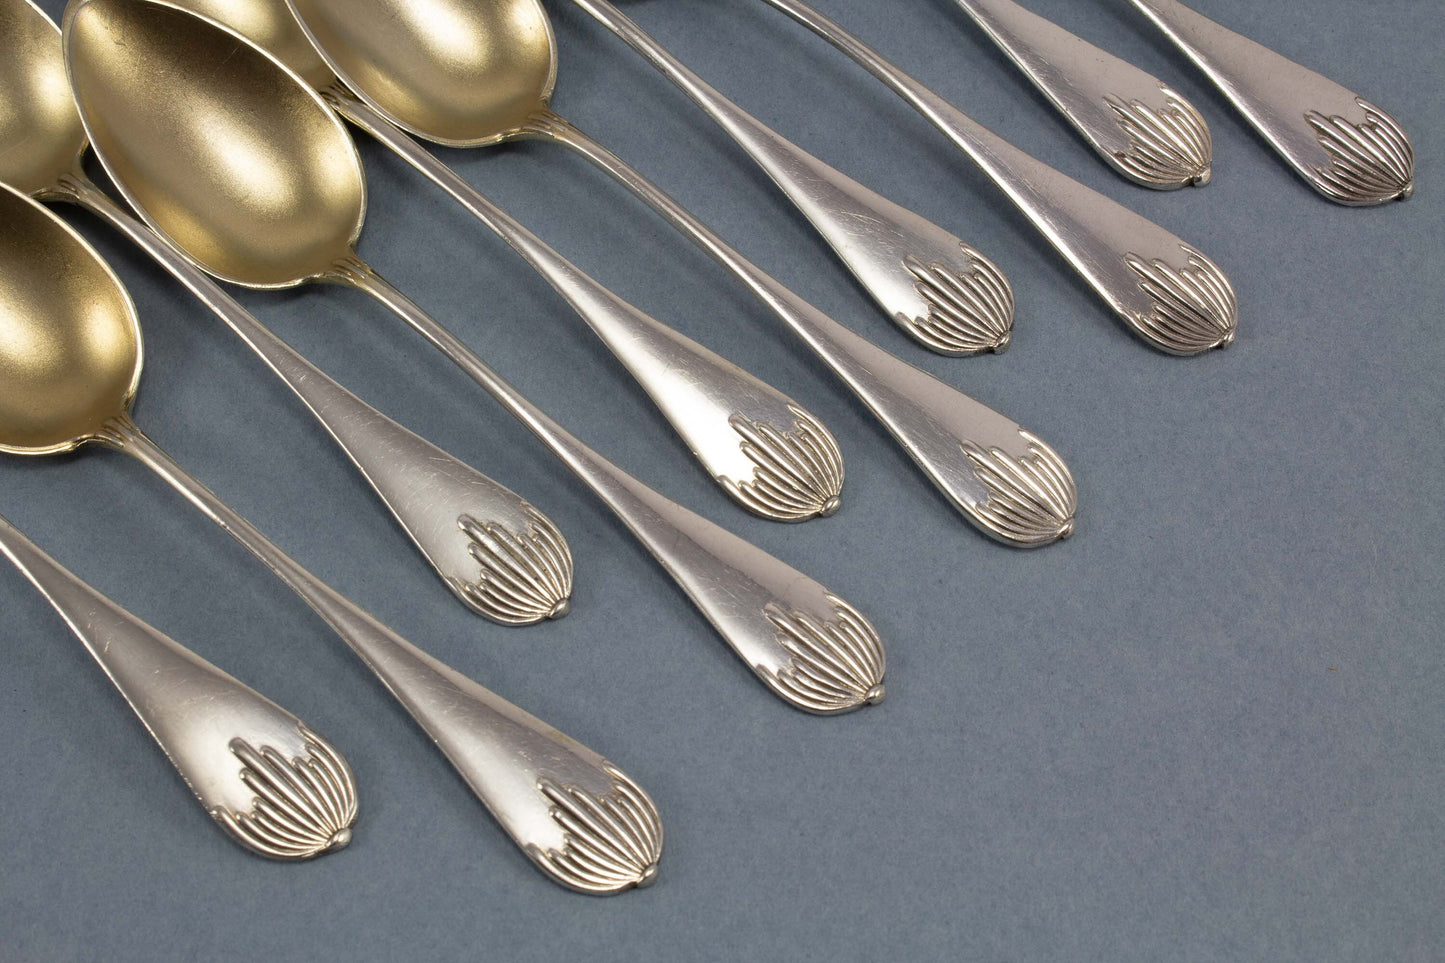 10 antique mocha spoons of 800 silver, Wilhelm Binder